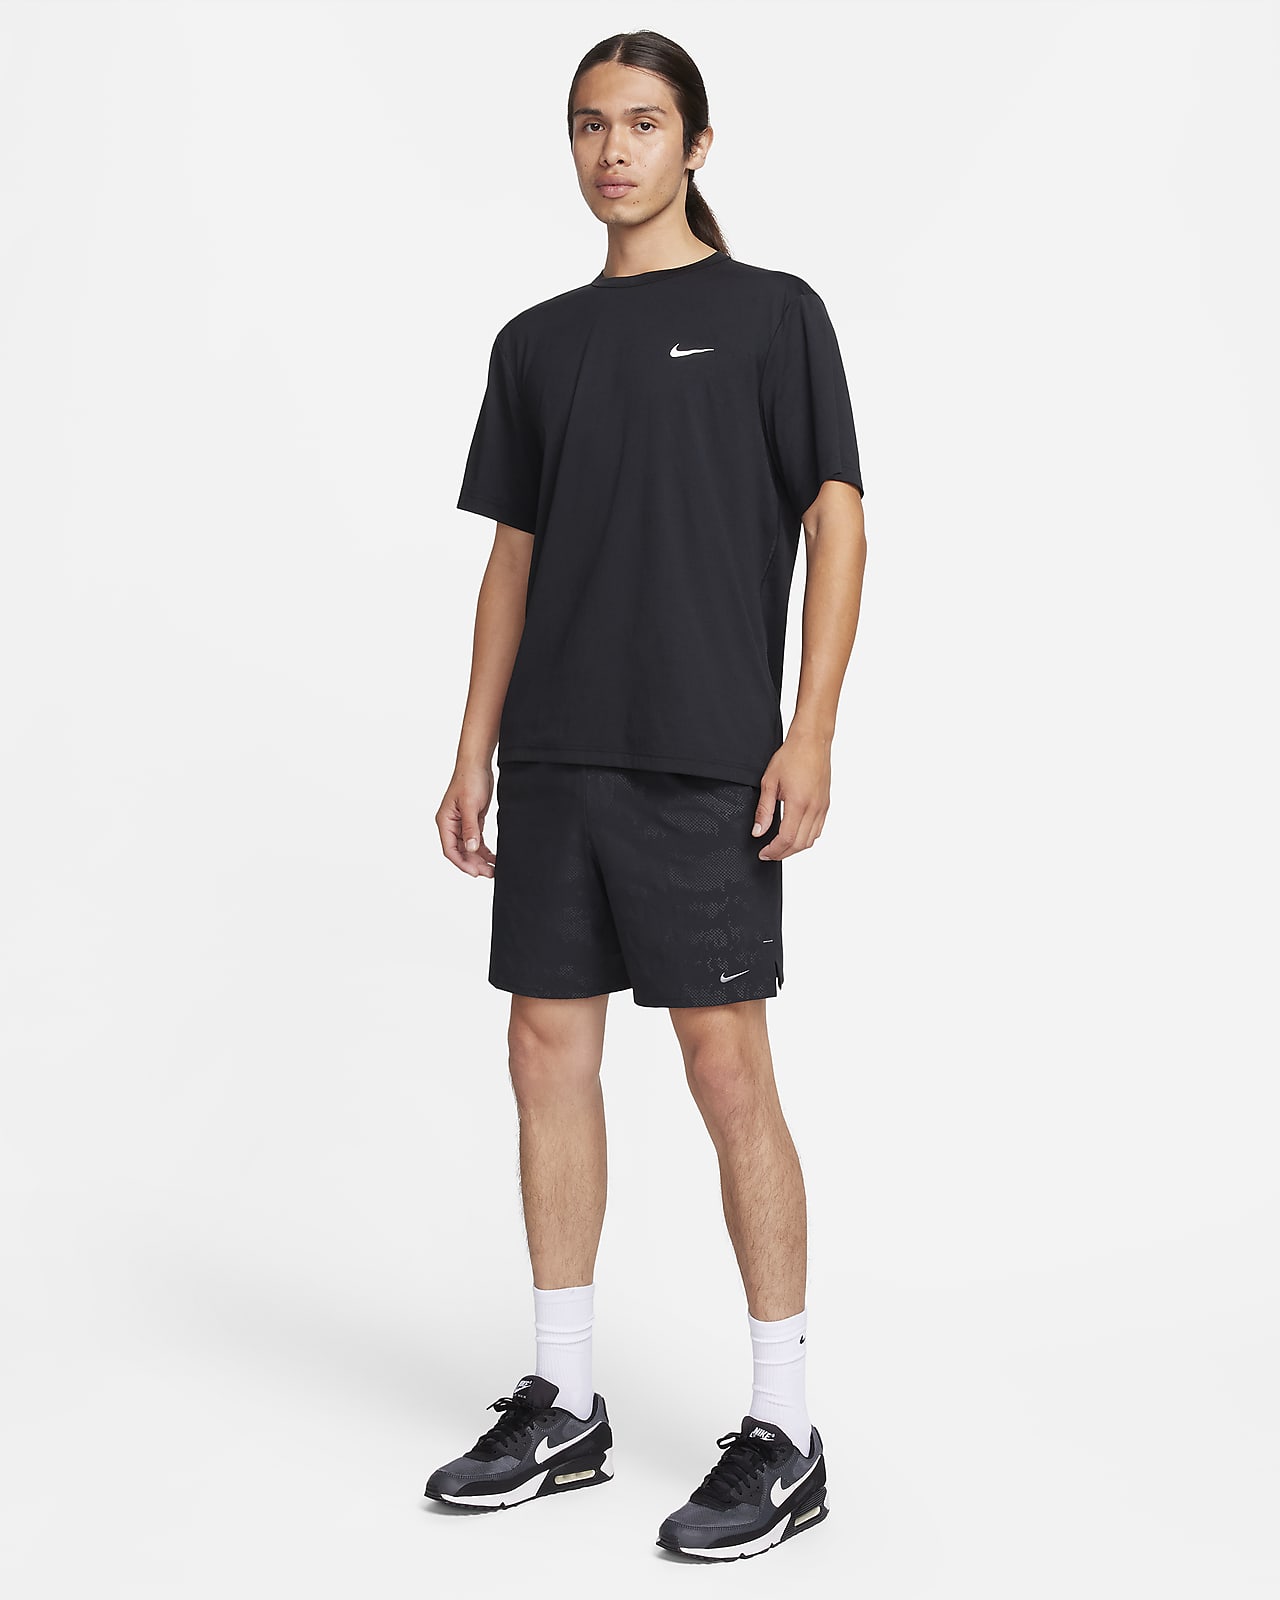 Nike Form Men's Dri-FIT 7 Unlined Versatile Shorts.